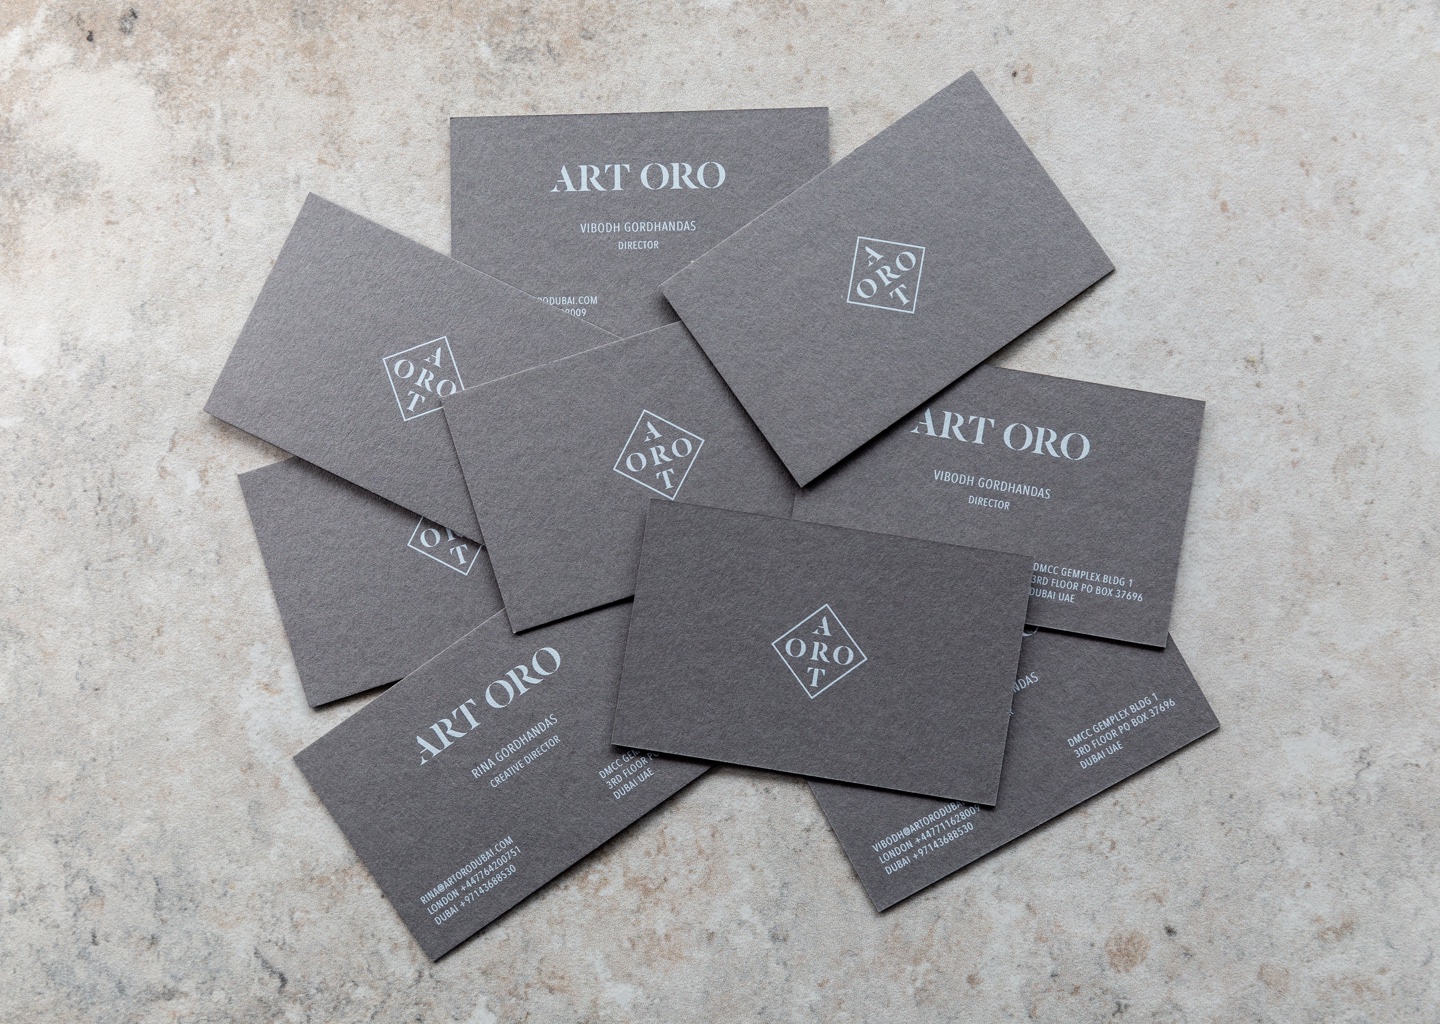 Art Oro brand design by Cargo Studio